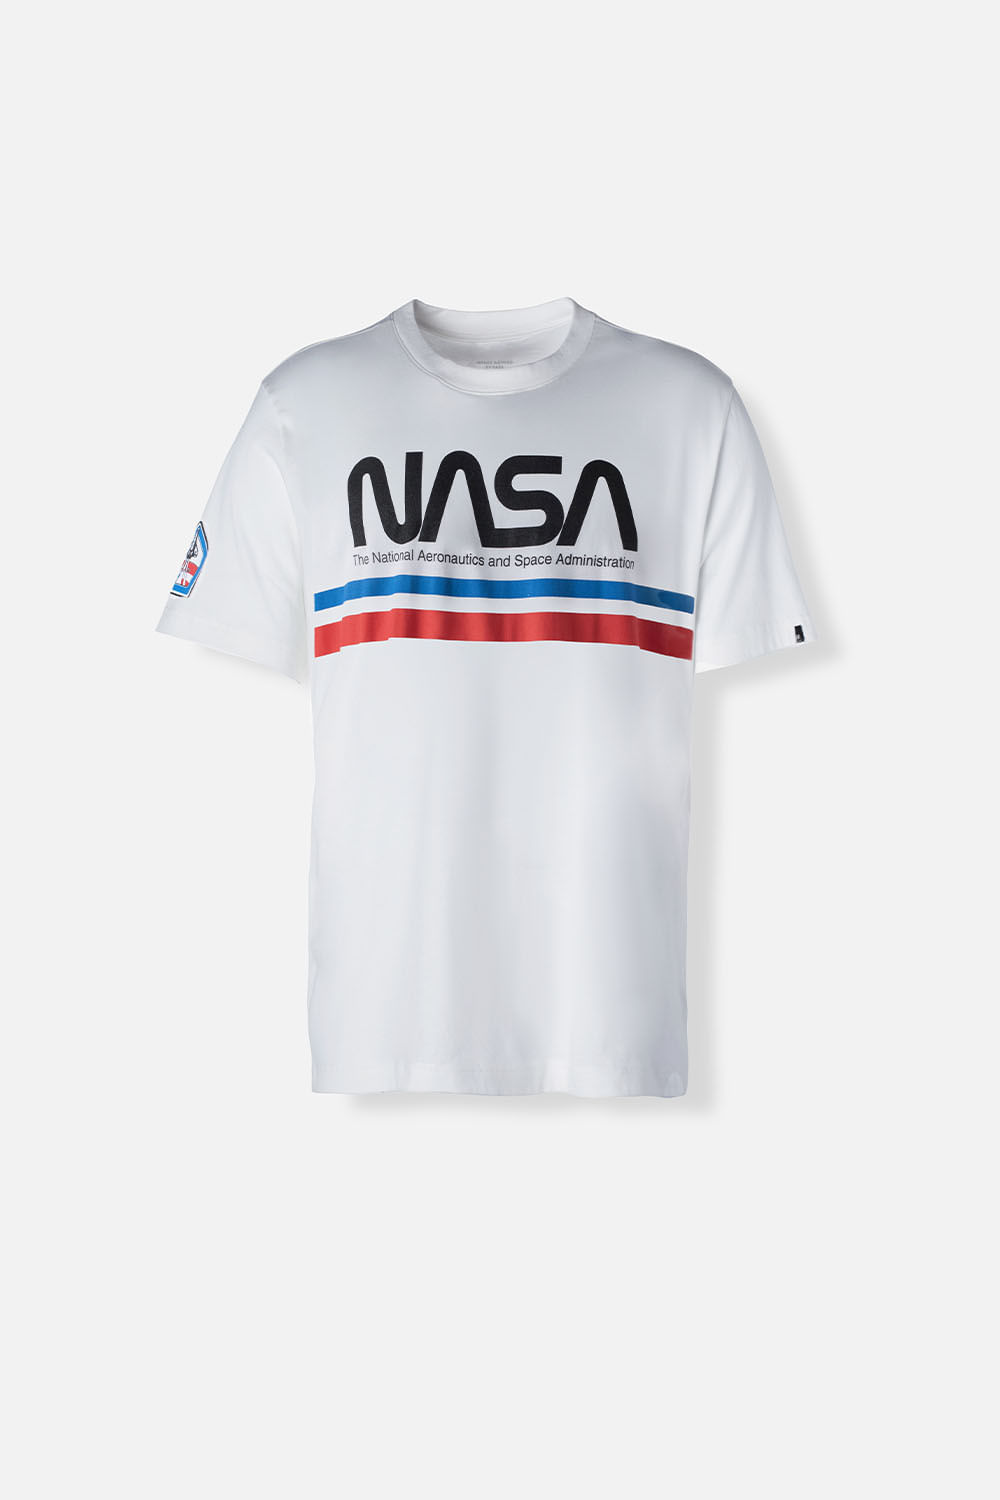 Camiseta de la Nasa blanca manga corta para hombre S-0